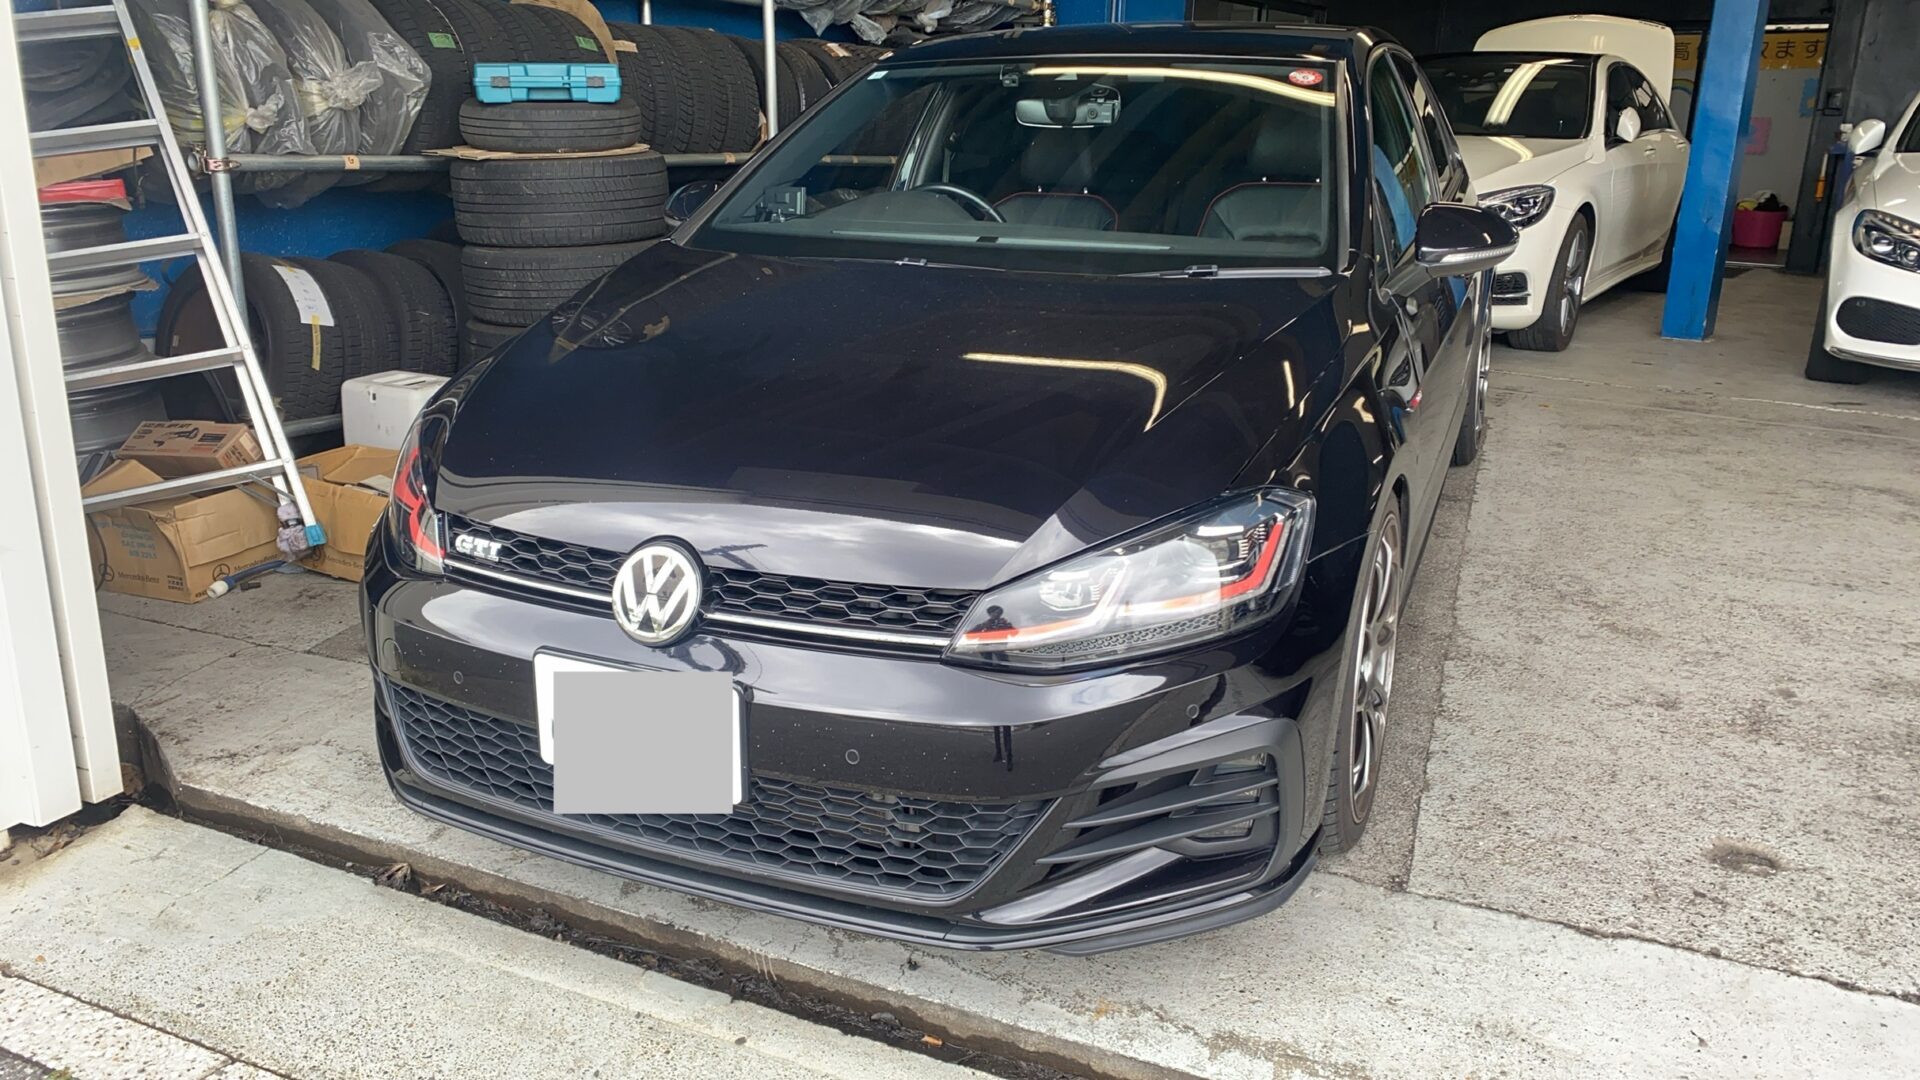 Volkswagen Golf7 GTI 80 hp increase ECU tuning + bubbling installation at 'ys Auto Chiba (mbFAST Tuning FC member shop)'.